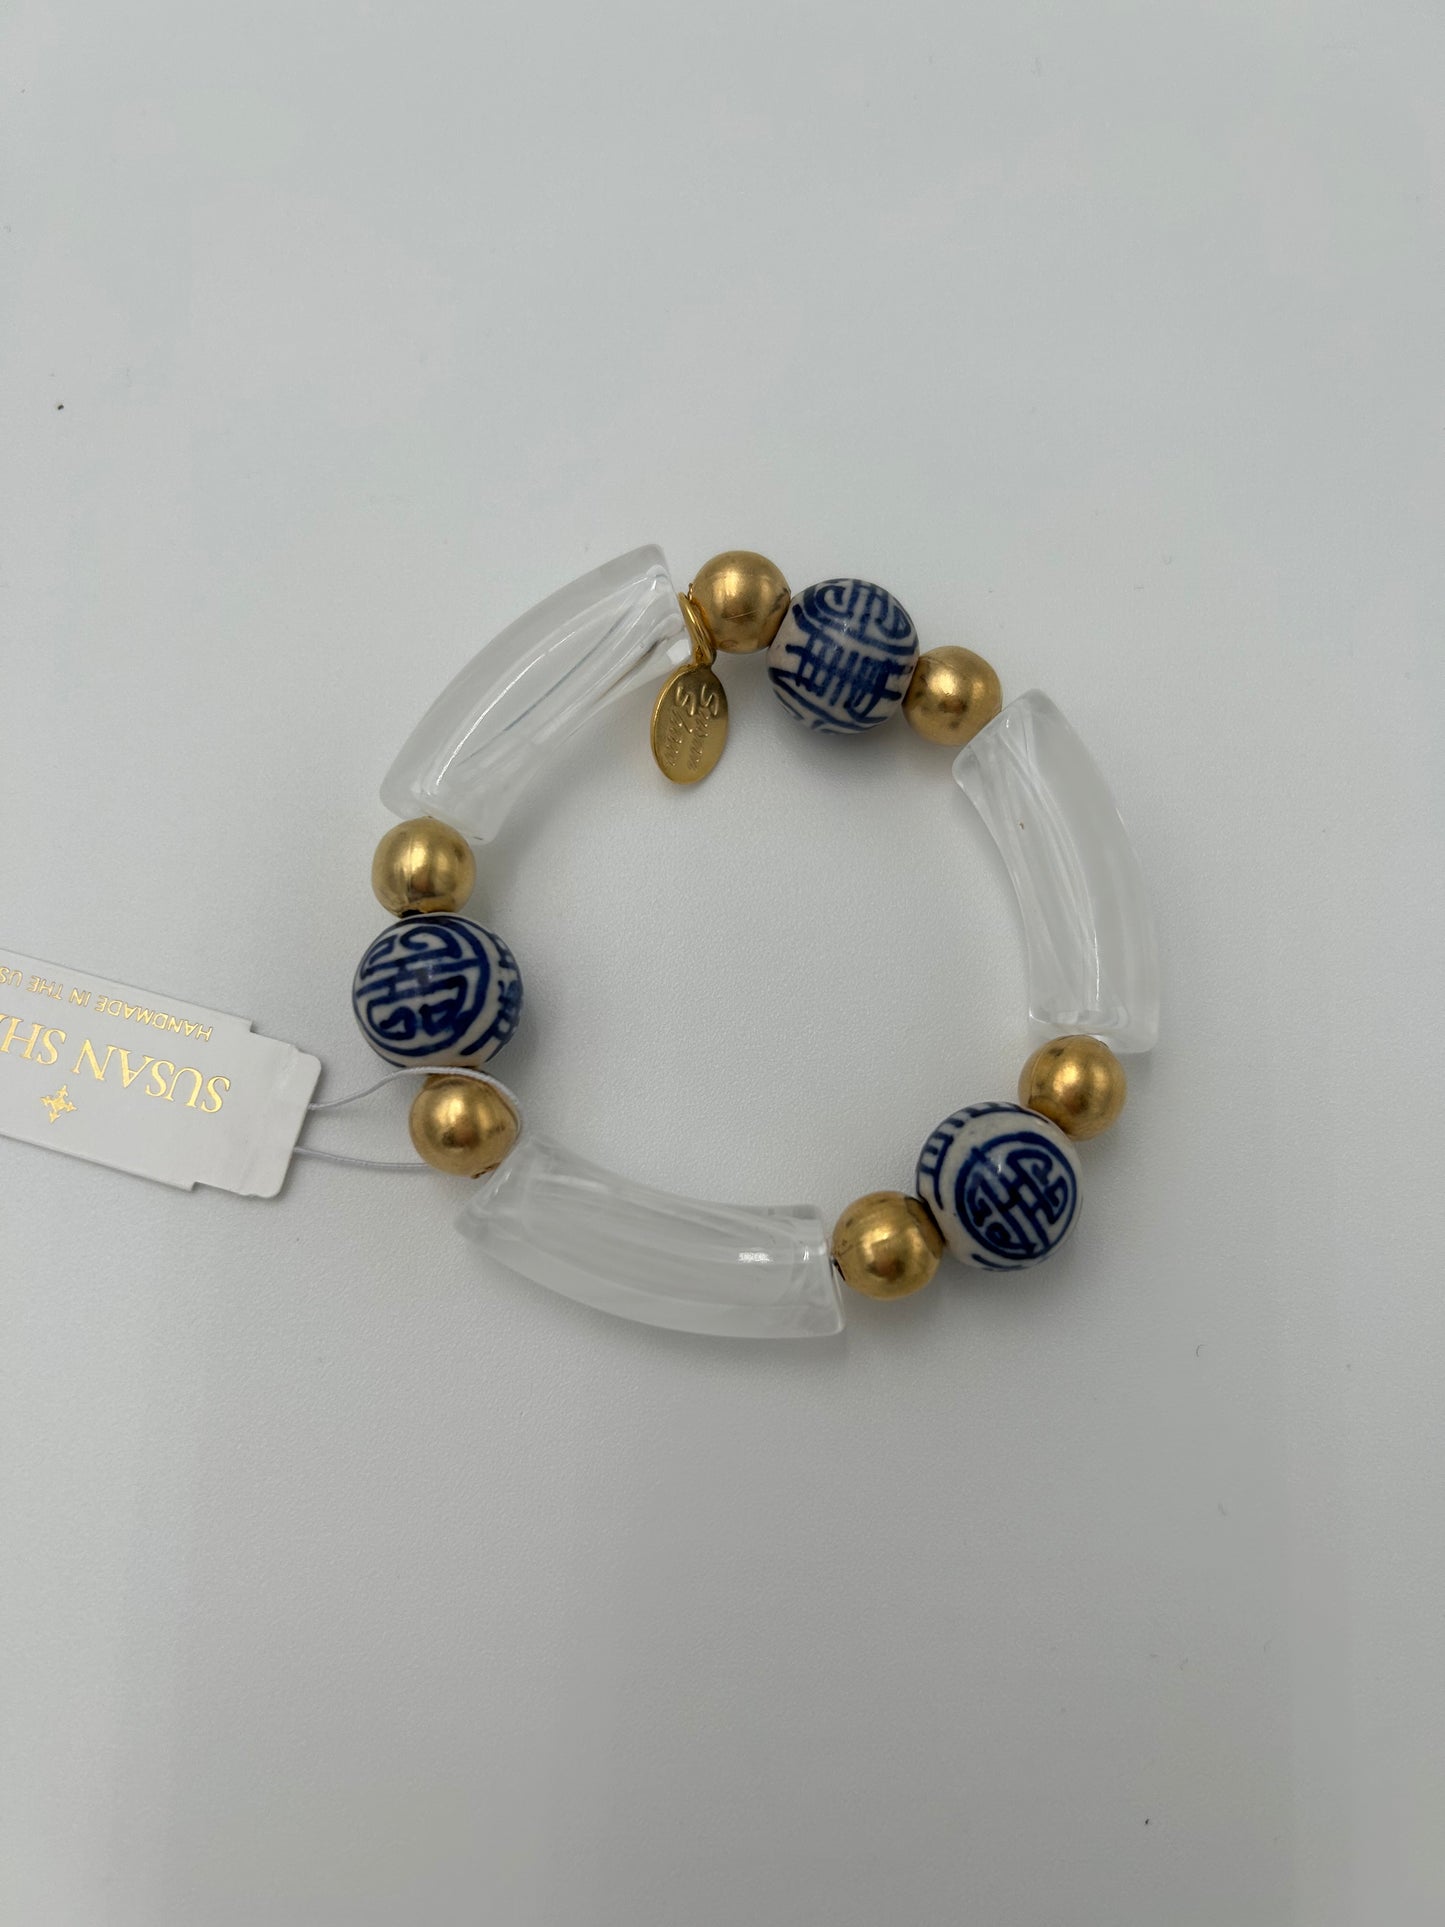 Susan Shaw Blue & White Charleston Bracelet